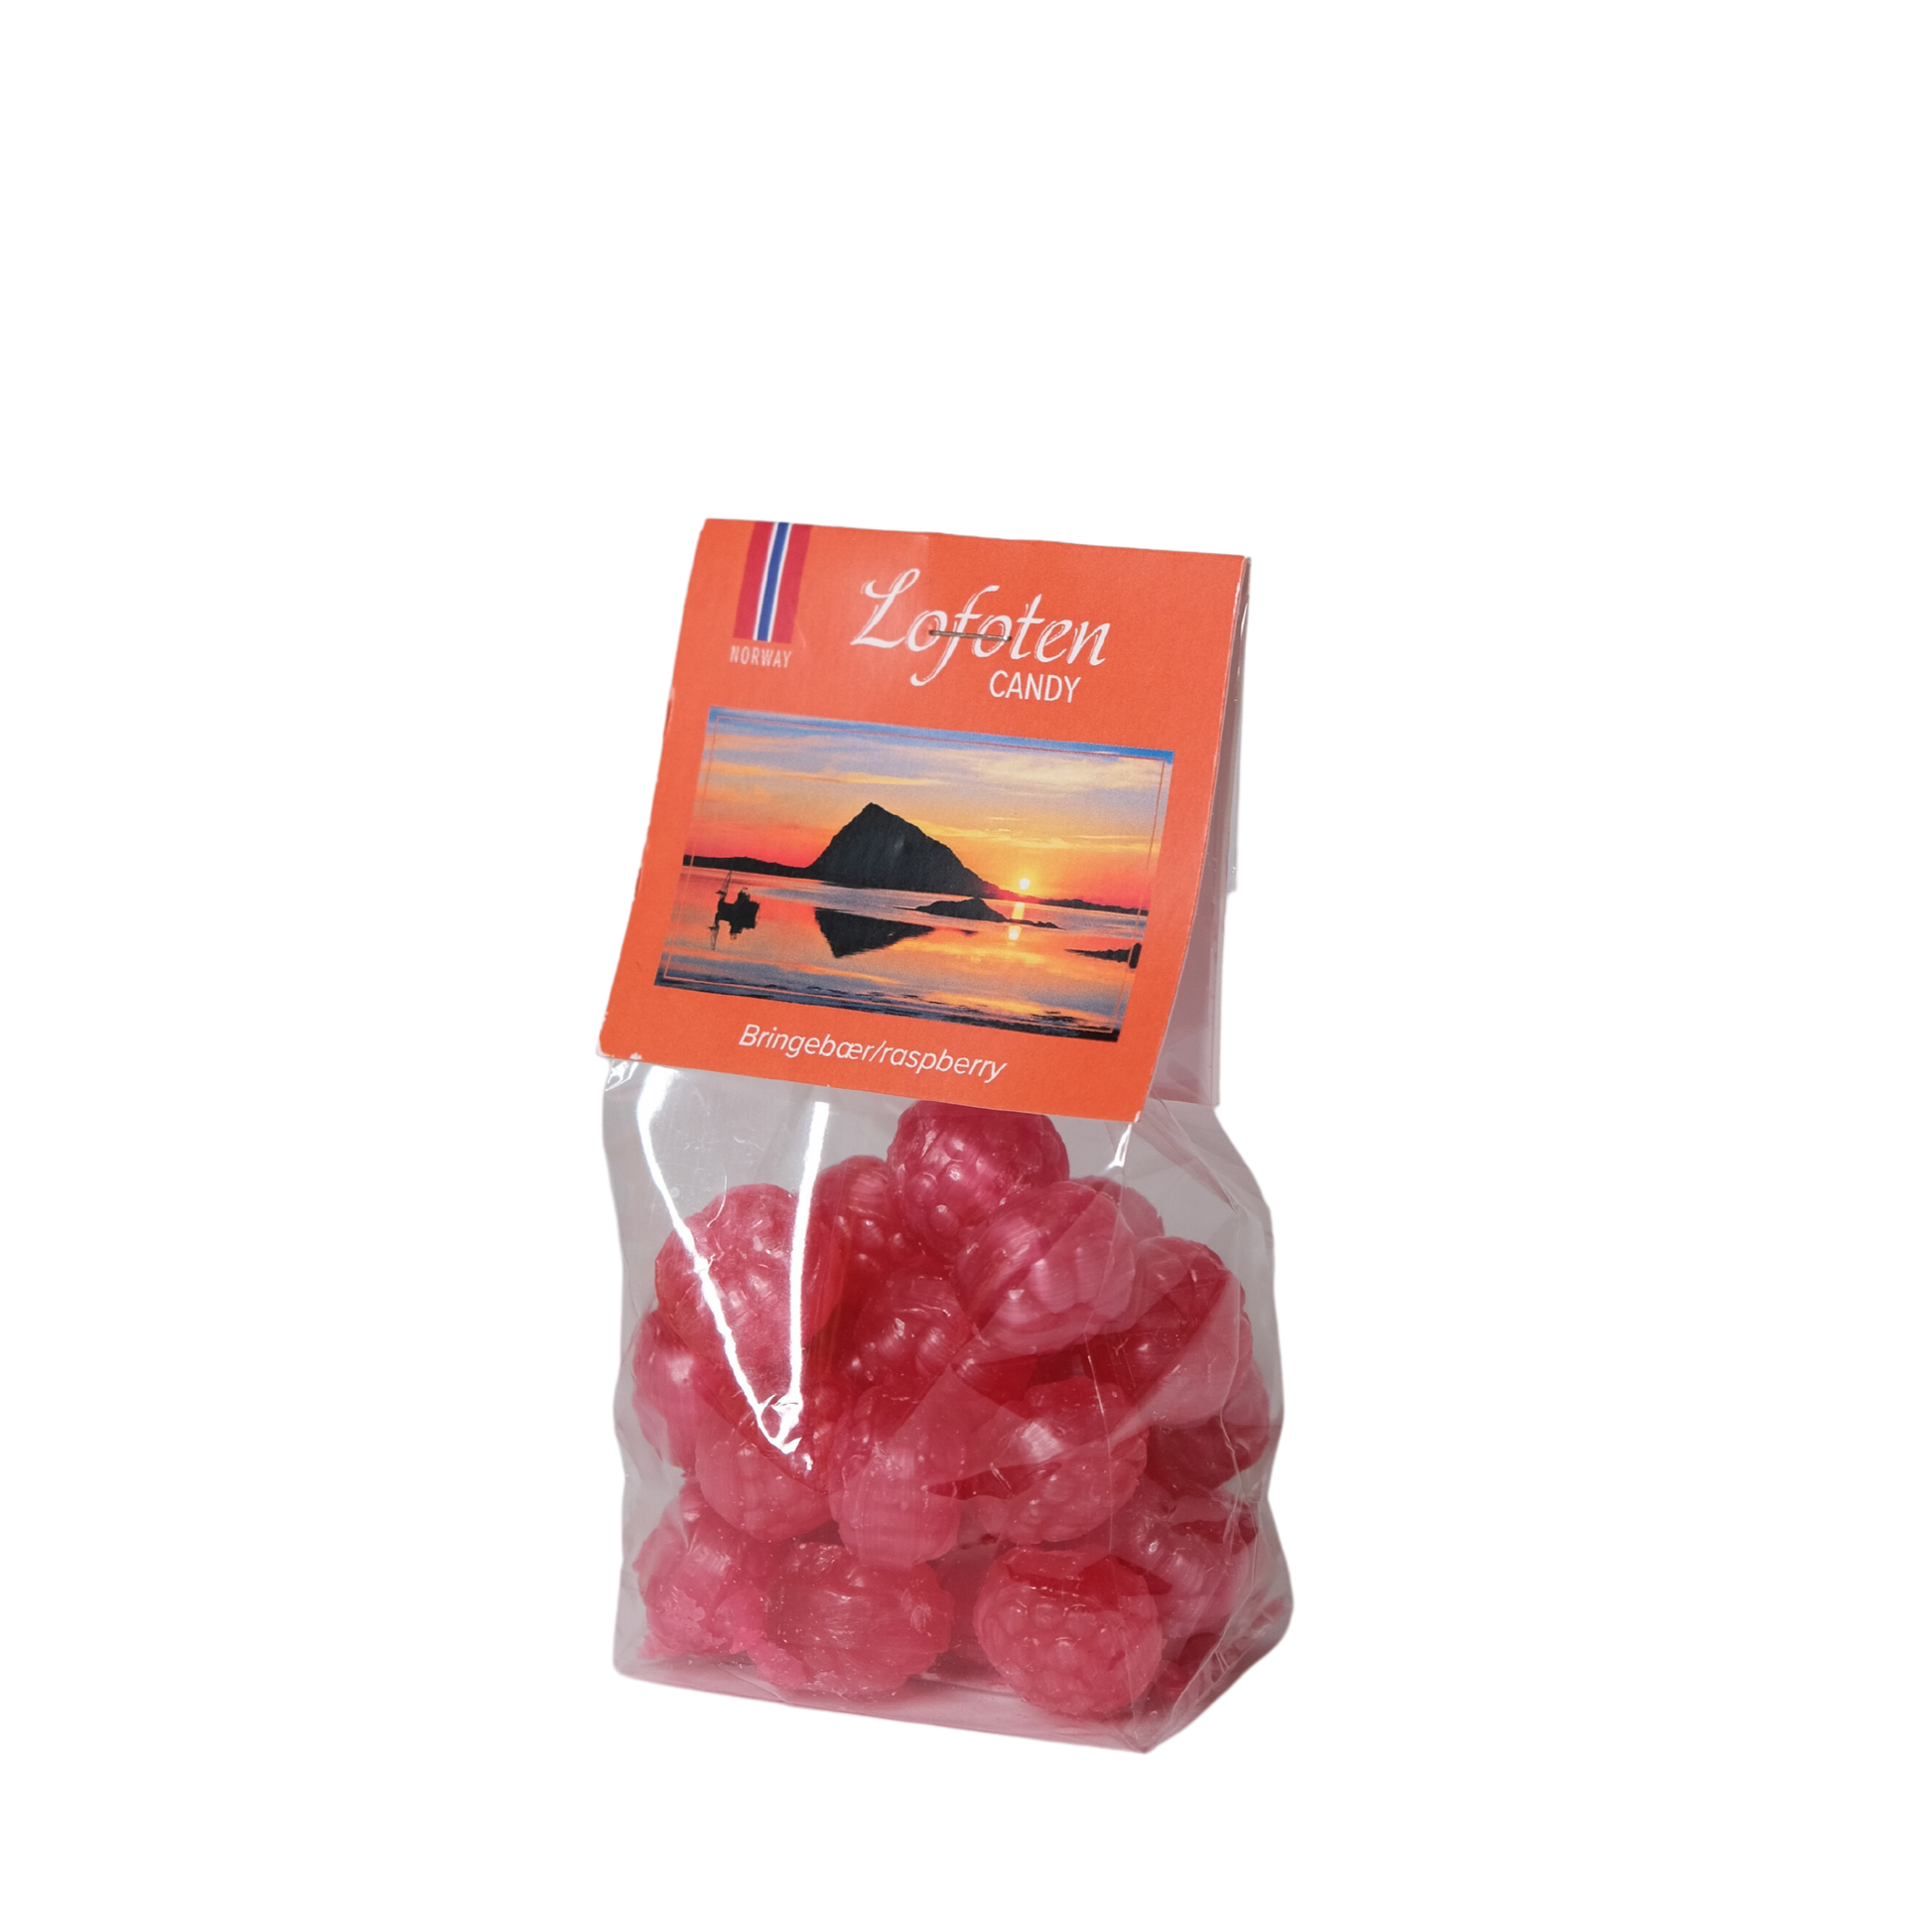 Lofoten candy with raspberry flavor